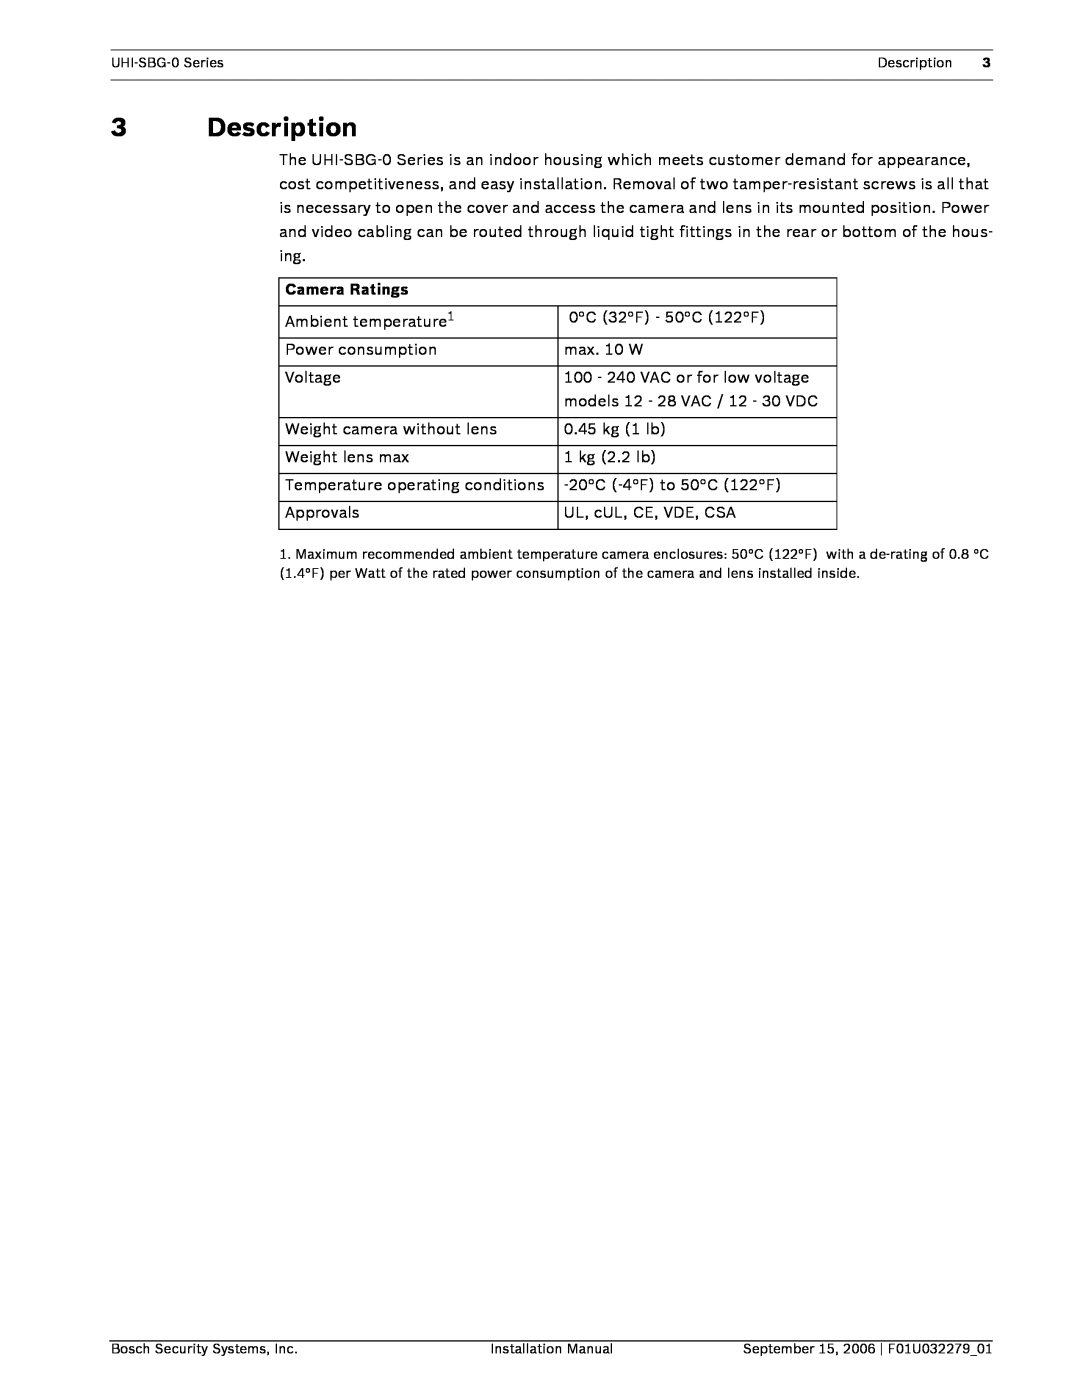 Bosch Appliances UHI-SBG-0 installation manual Description, Camera Ratings 